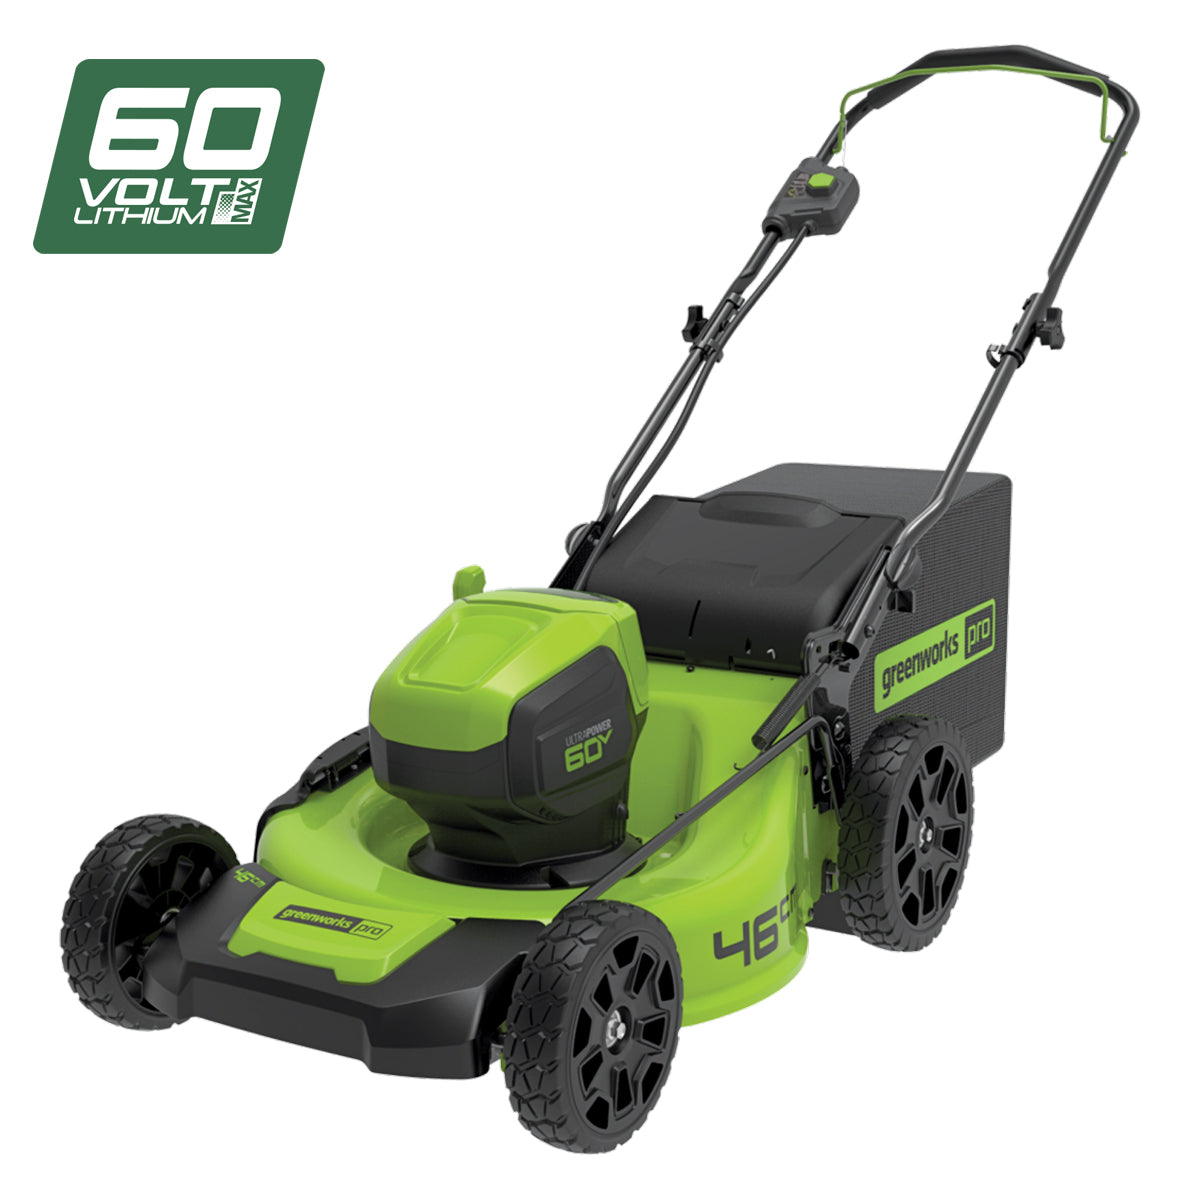 Greenworks 60V Pro Brushless Push Lawnmower (18")